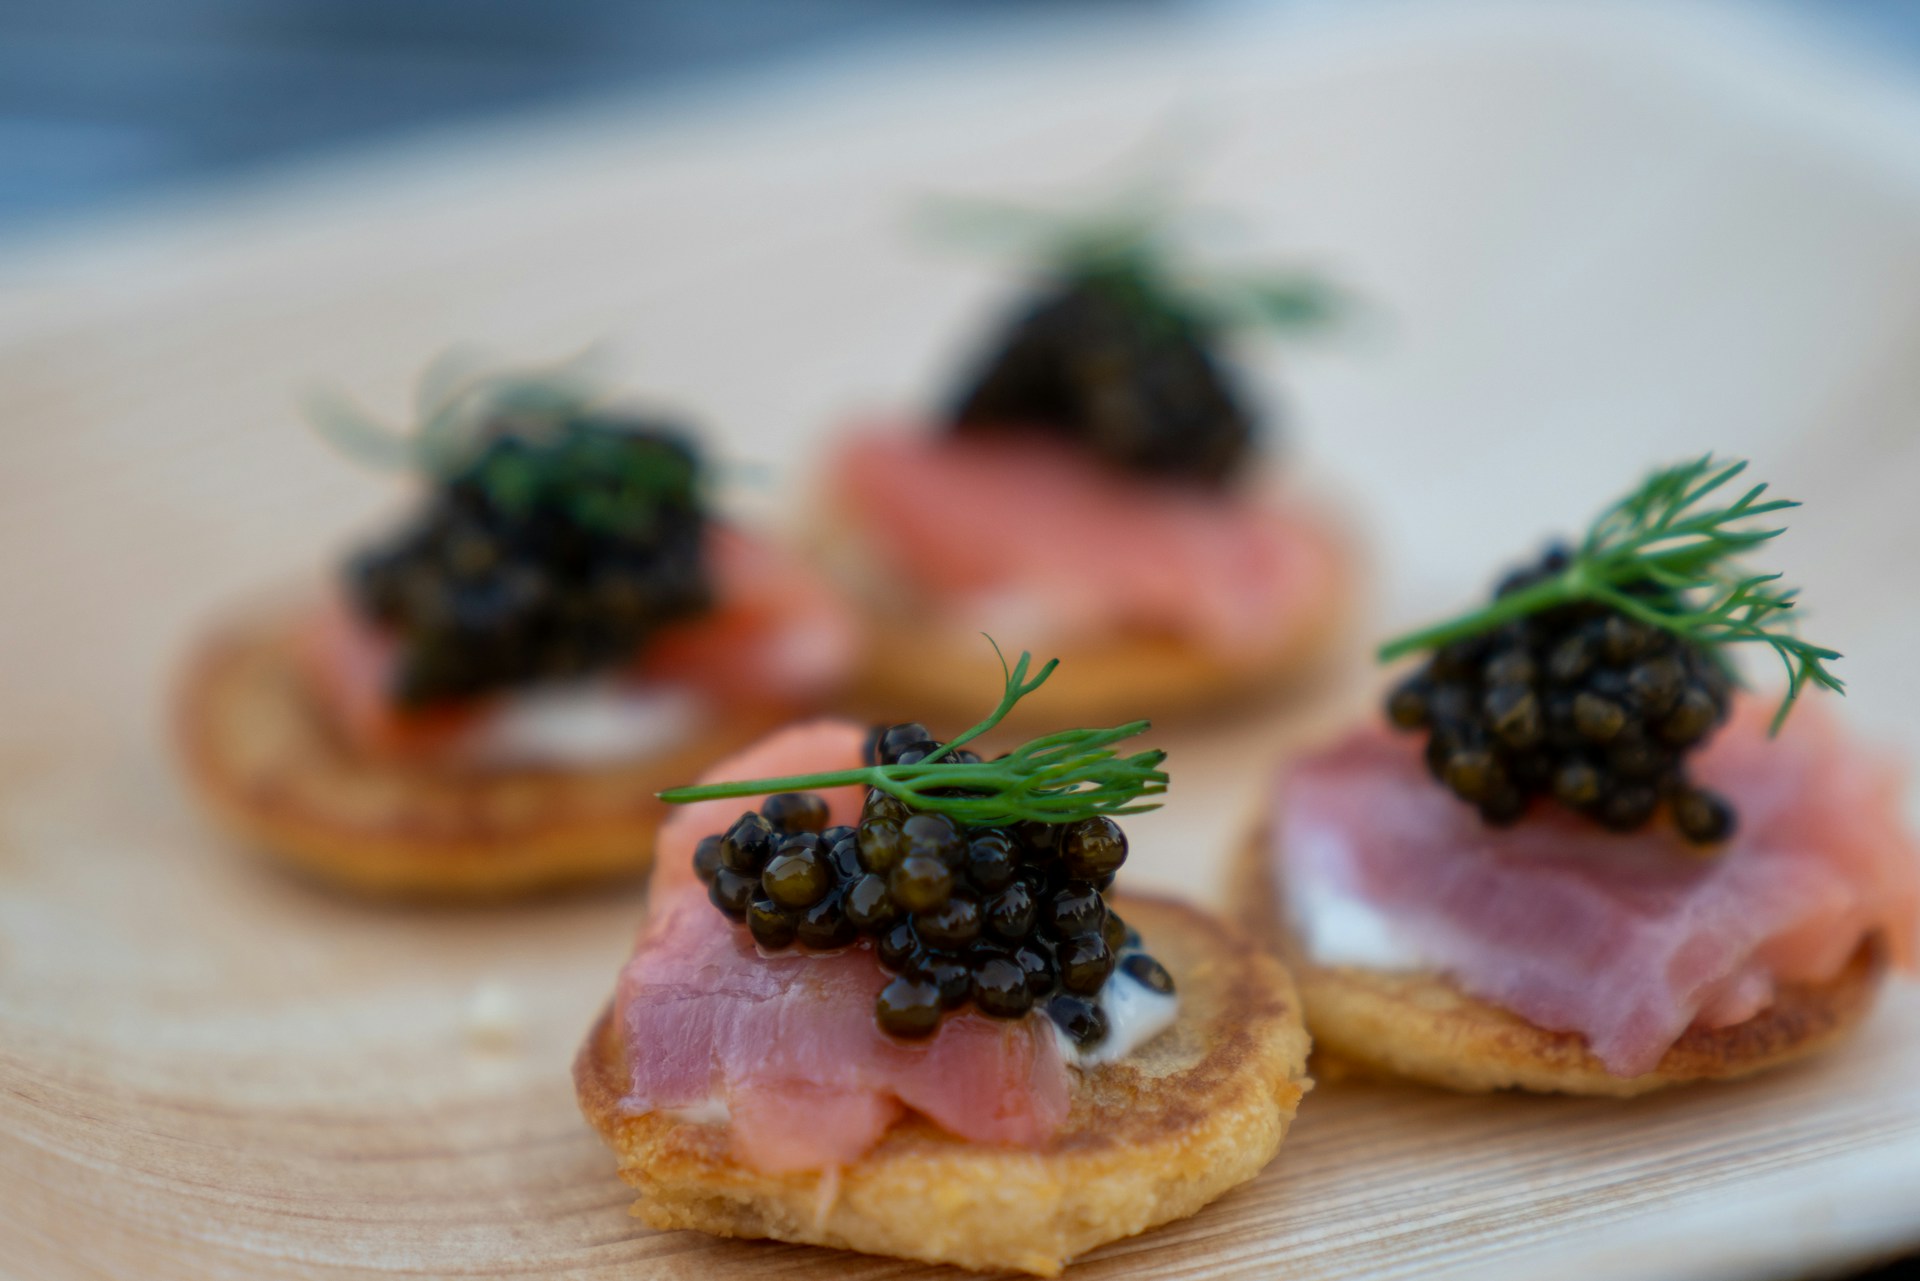 caviar and garnish on small pancakes